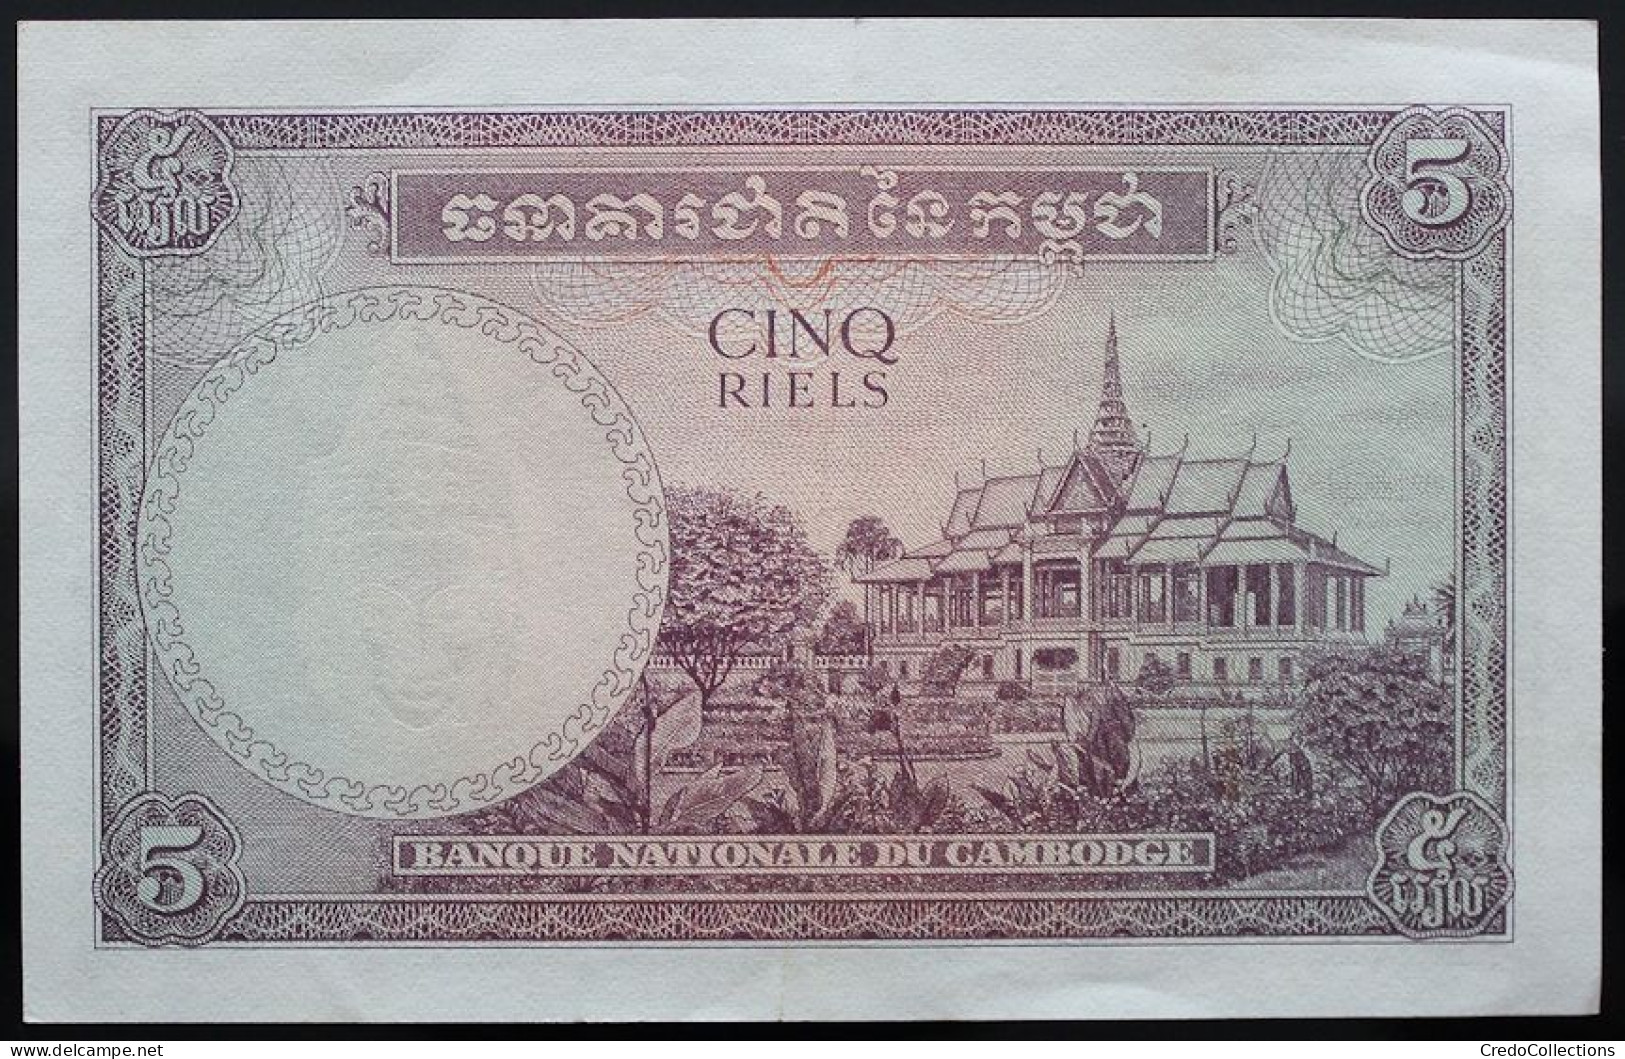 Cambodge - 5 Riels - 1955 - PICK 2a - SUP+ - Cambodia